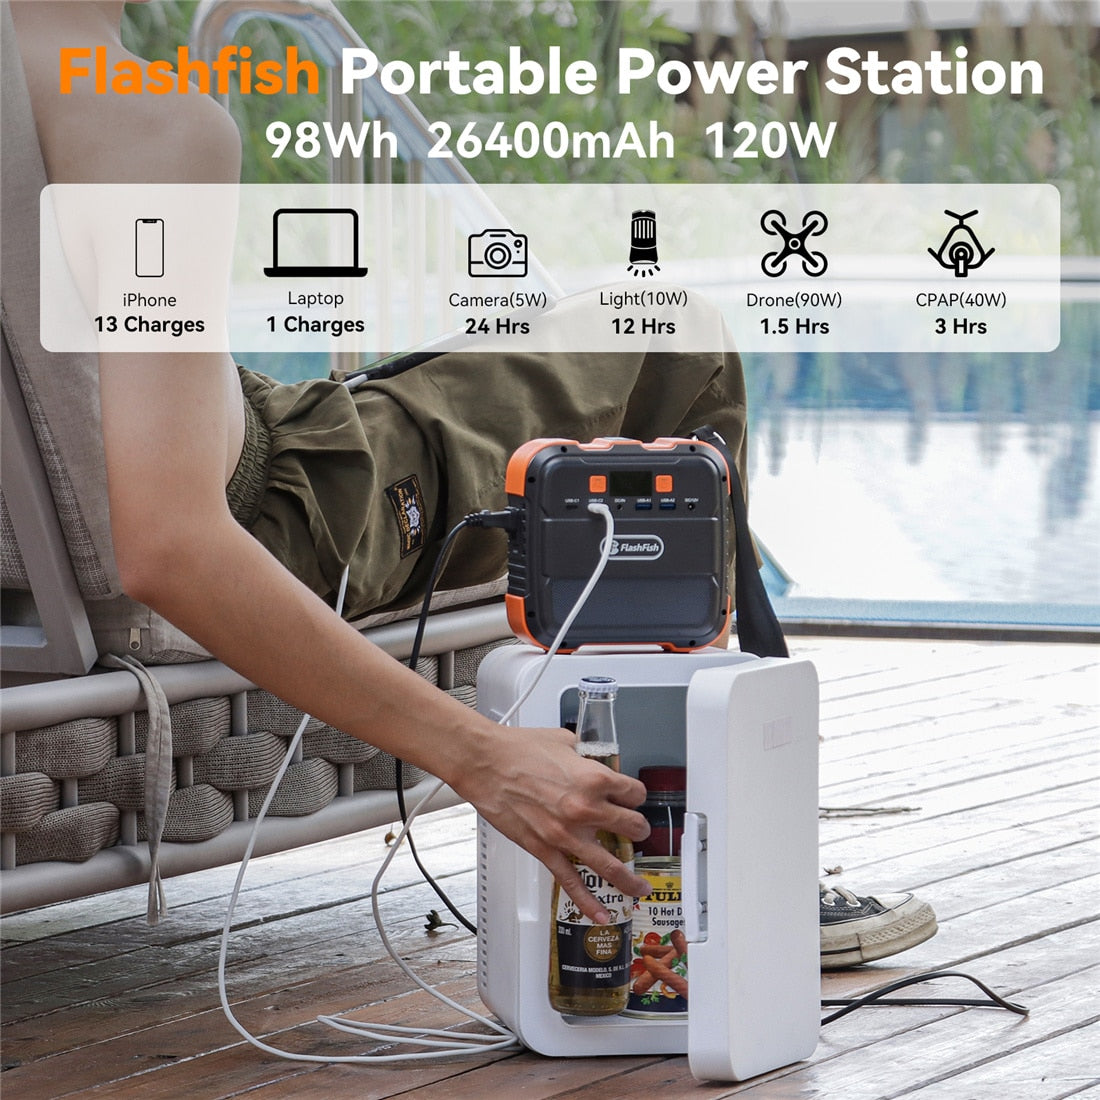 FF Flashfish A101, FS"fish Portable Power Station 98Wh 26400mAh